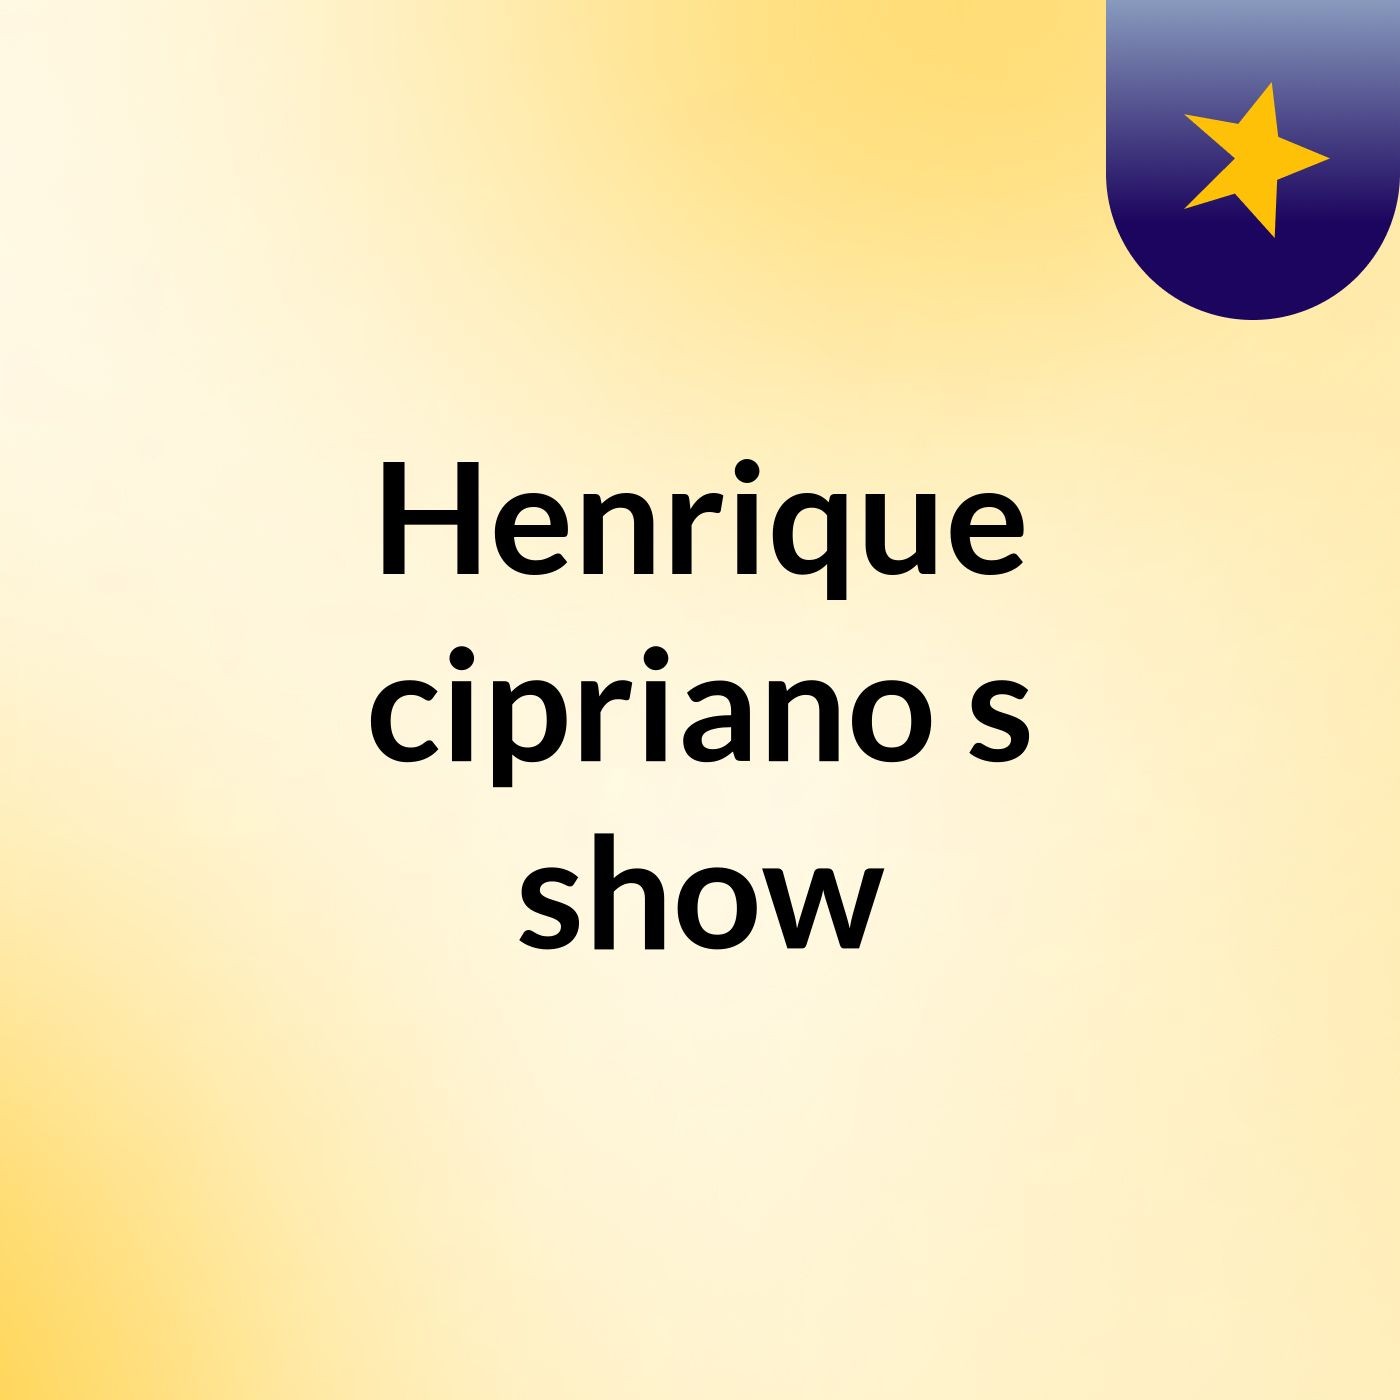 Henrique cipriano's show